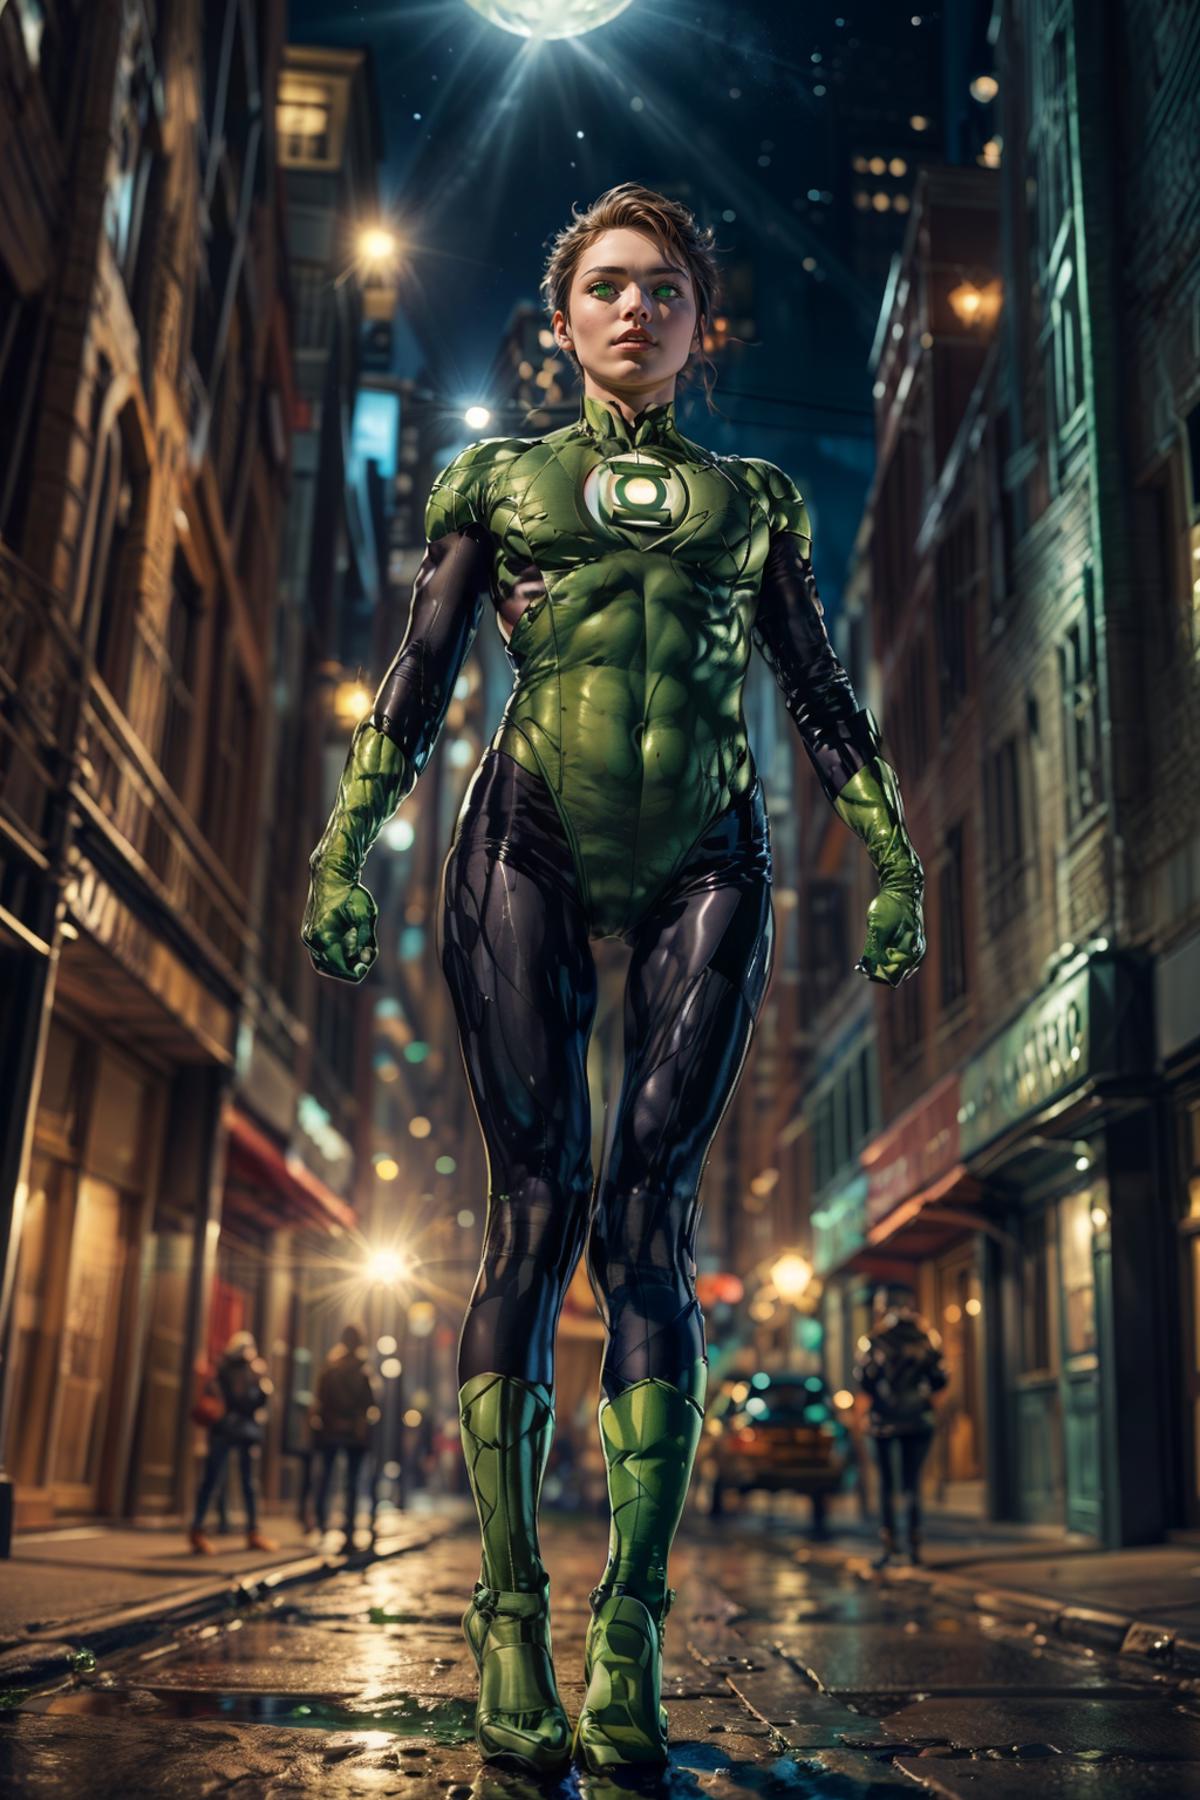 Hal Jordan/Green lantern  image by jhony007